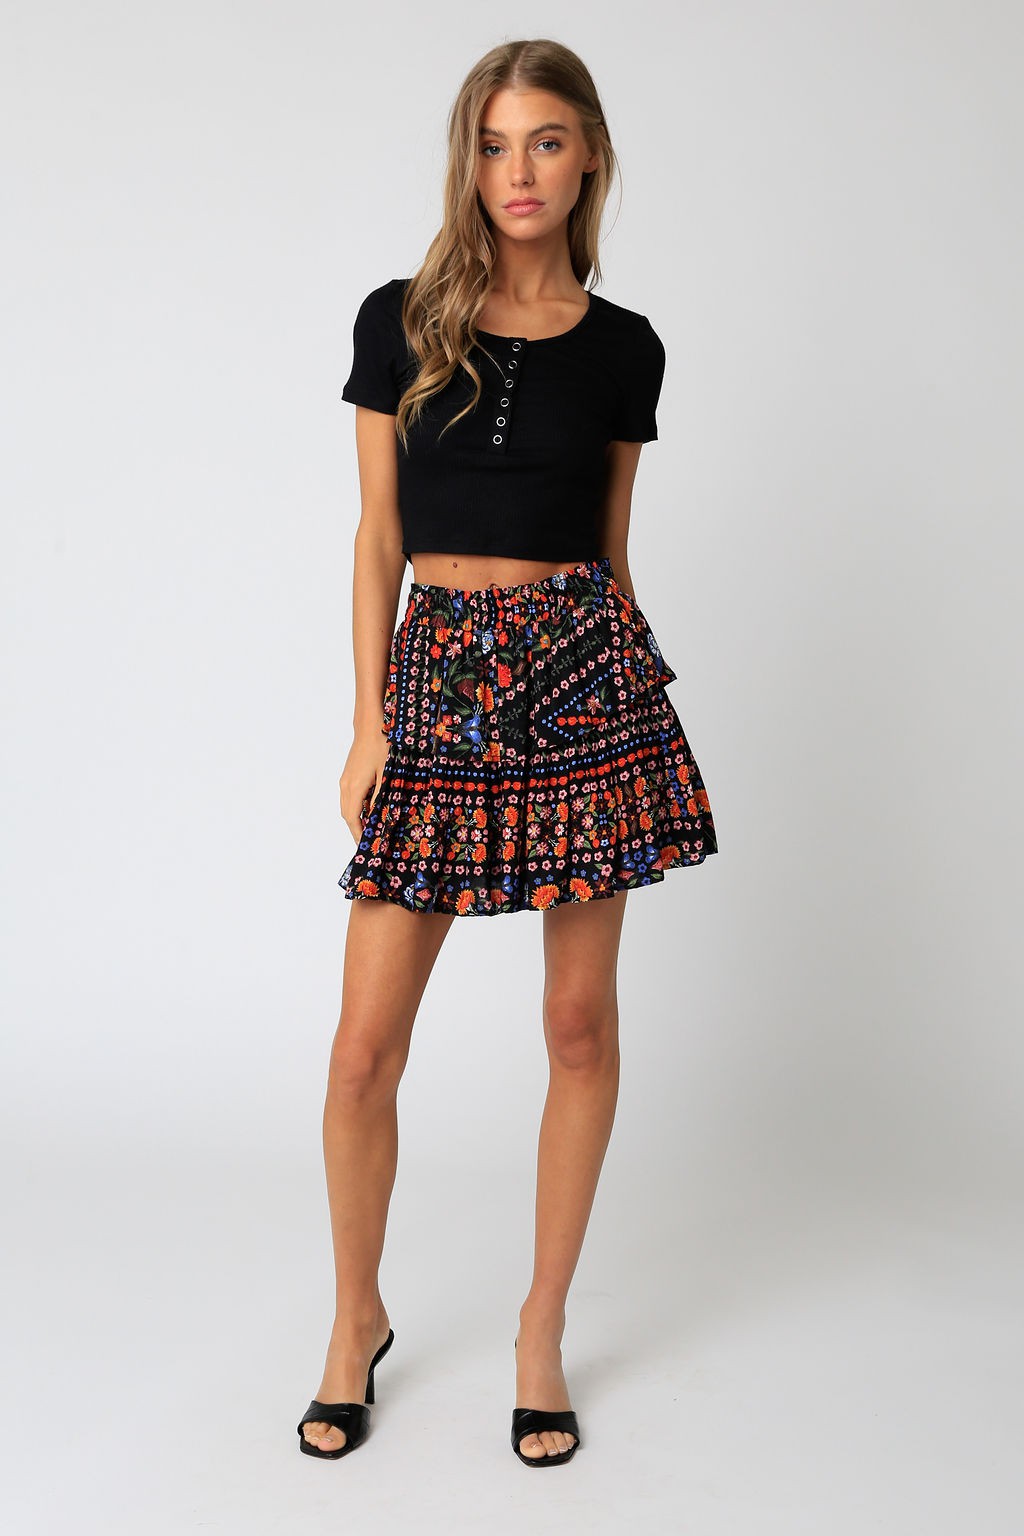 The Posie Floral Mini Skirt